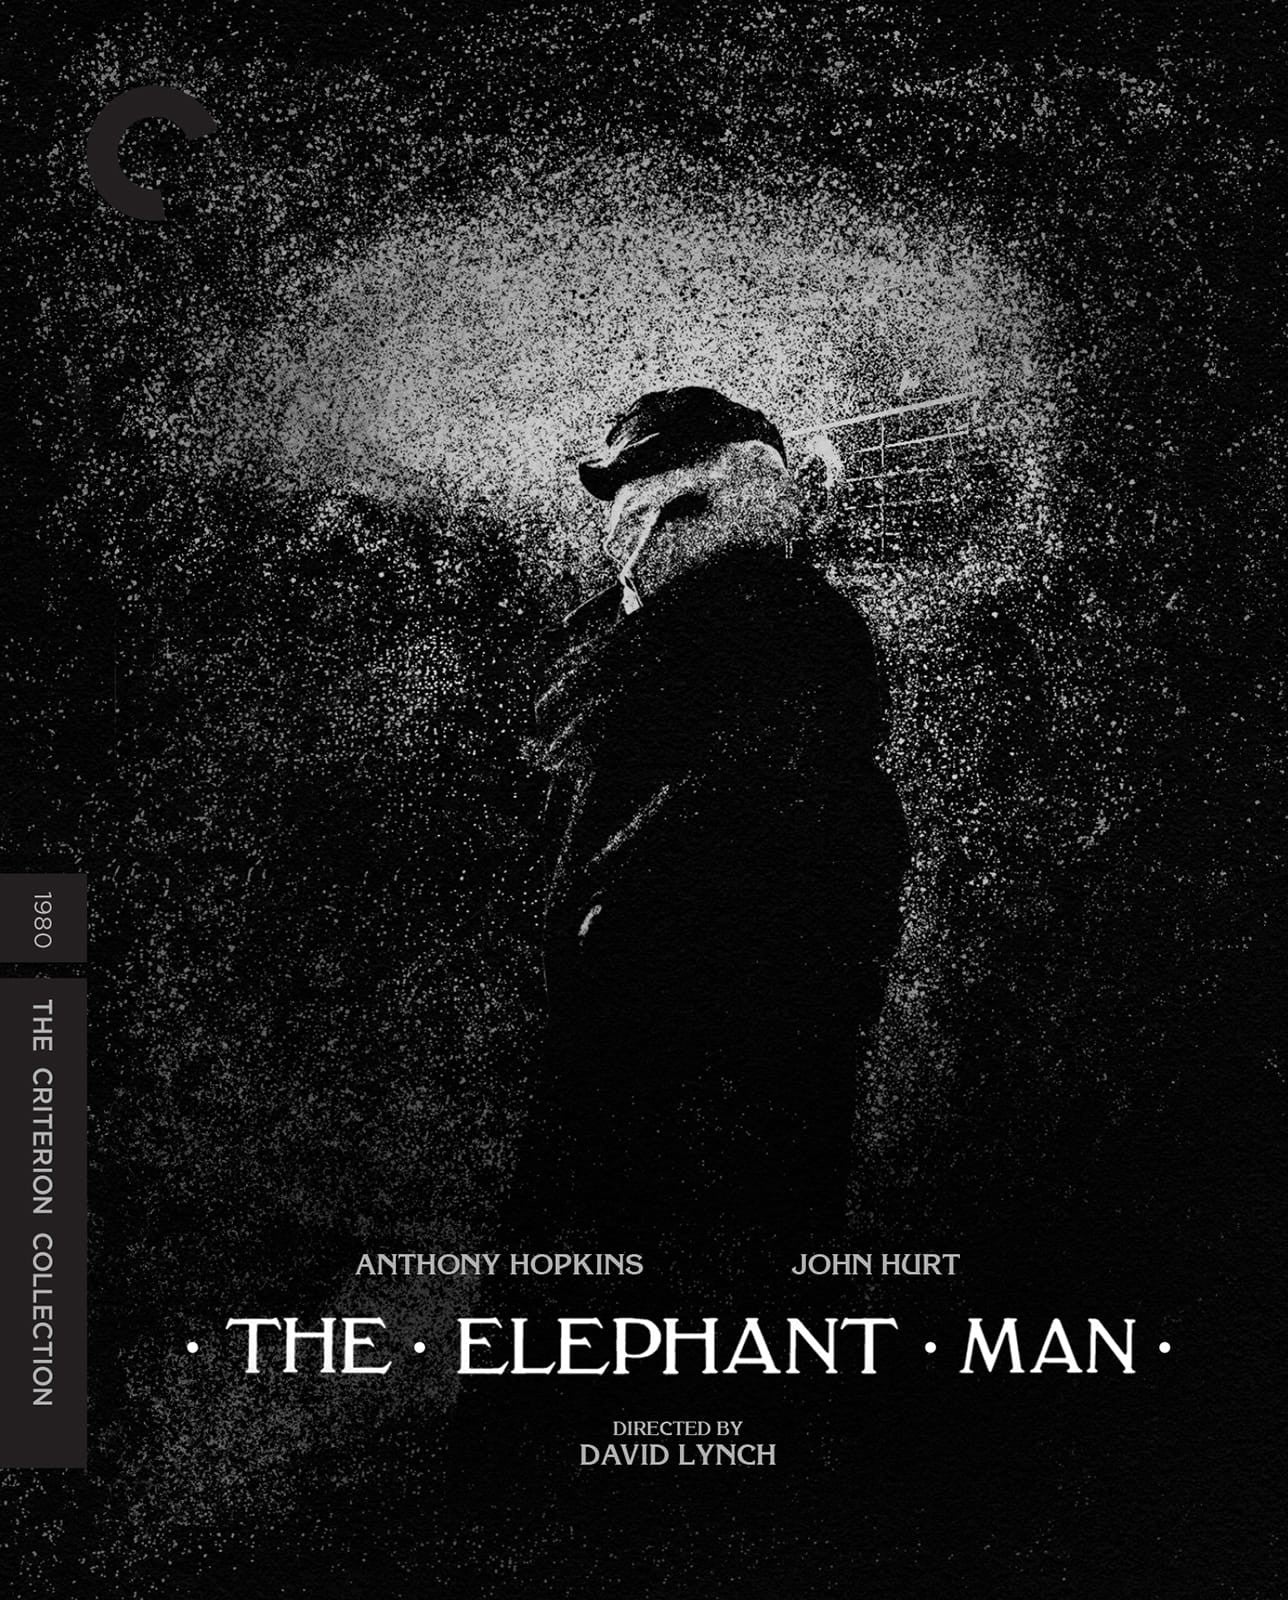 Lynch, David - The Elephant Man - DVD